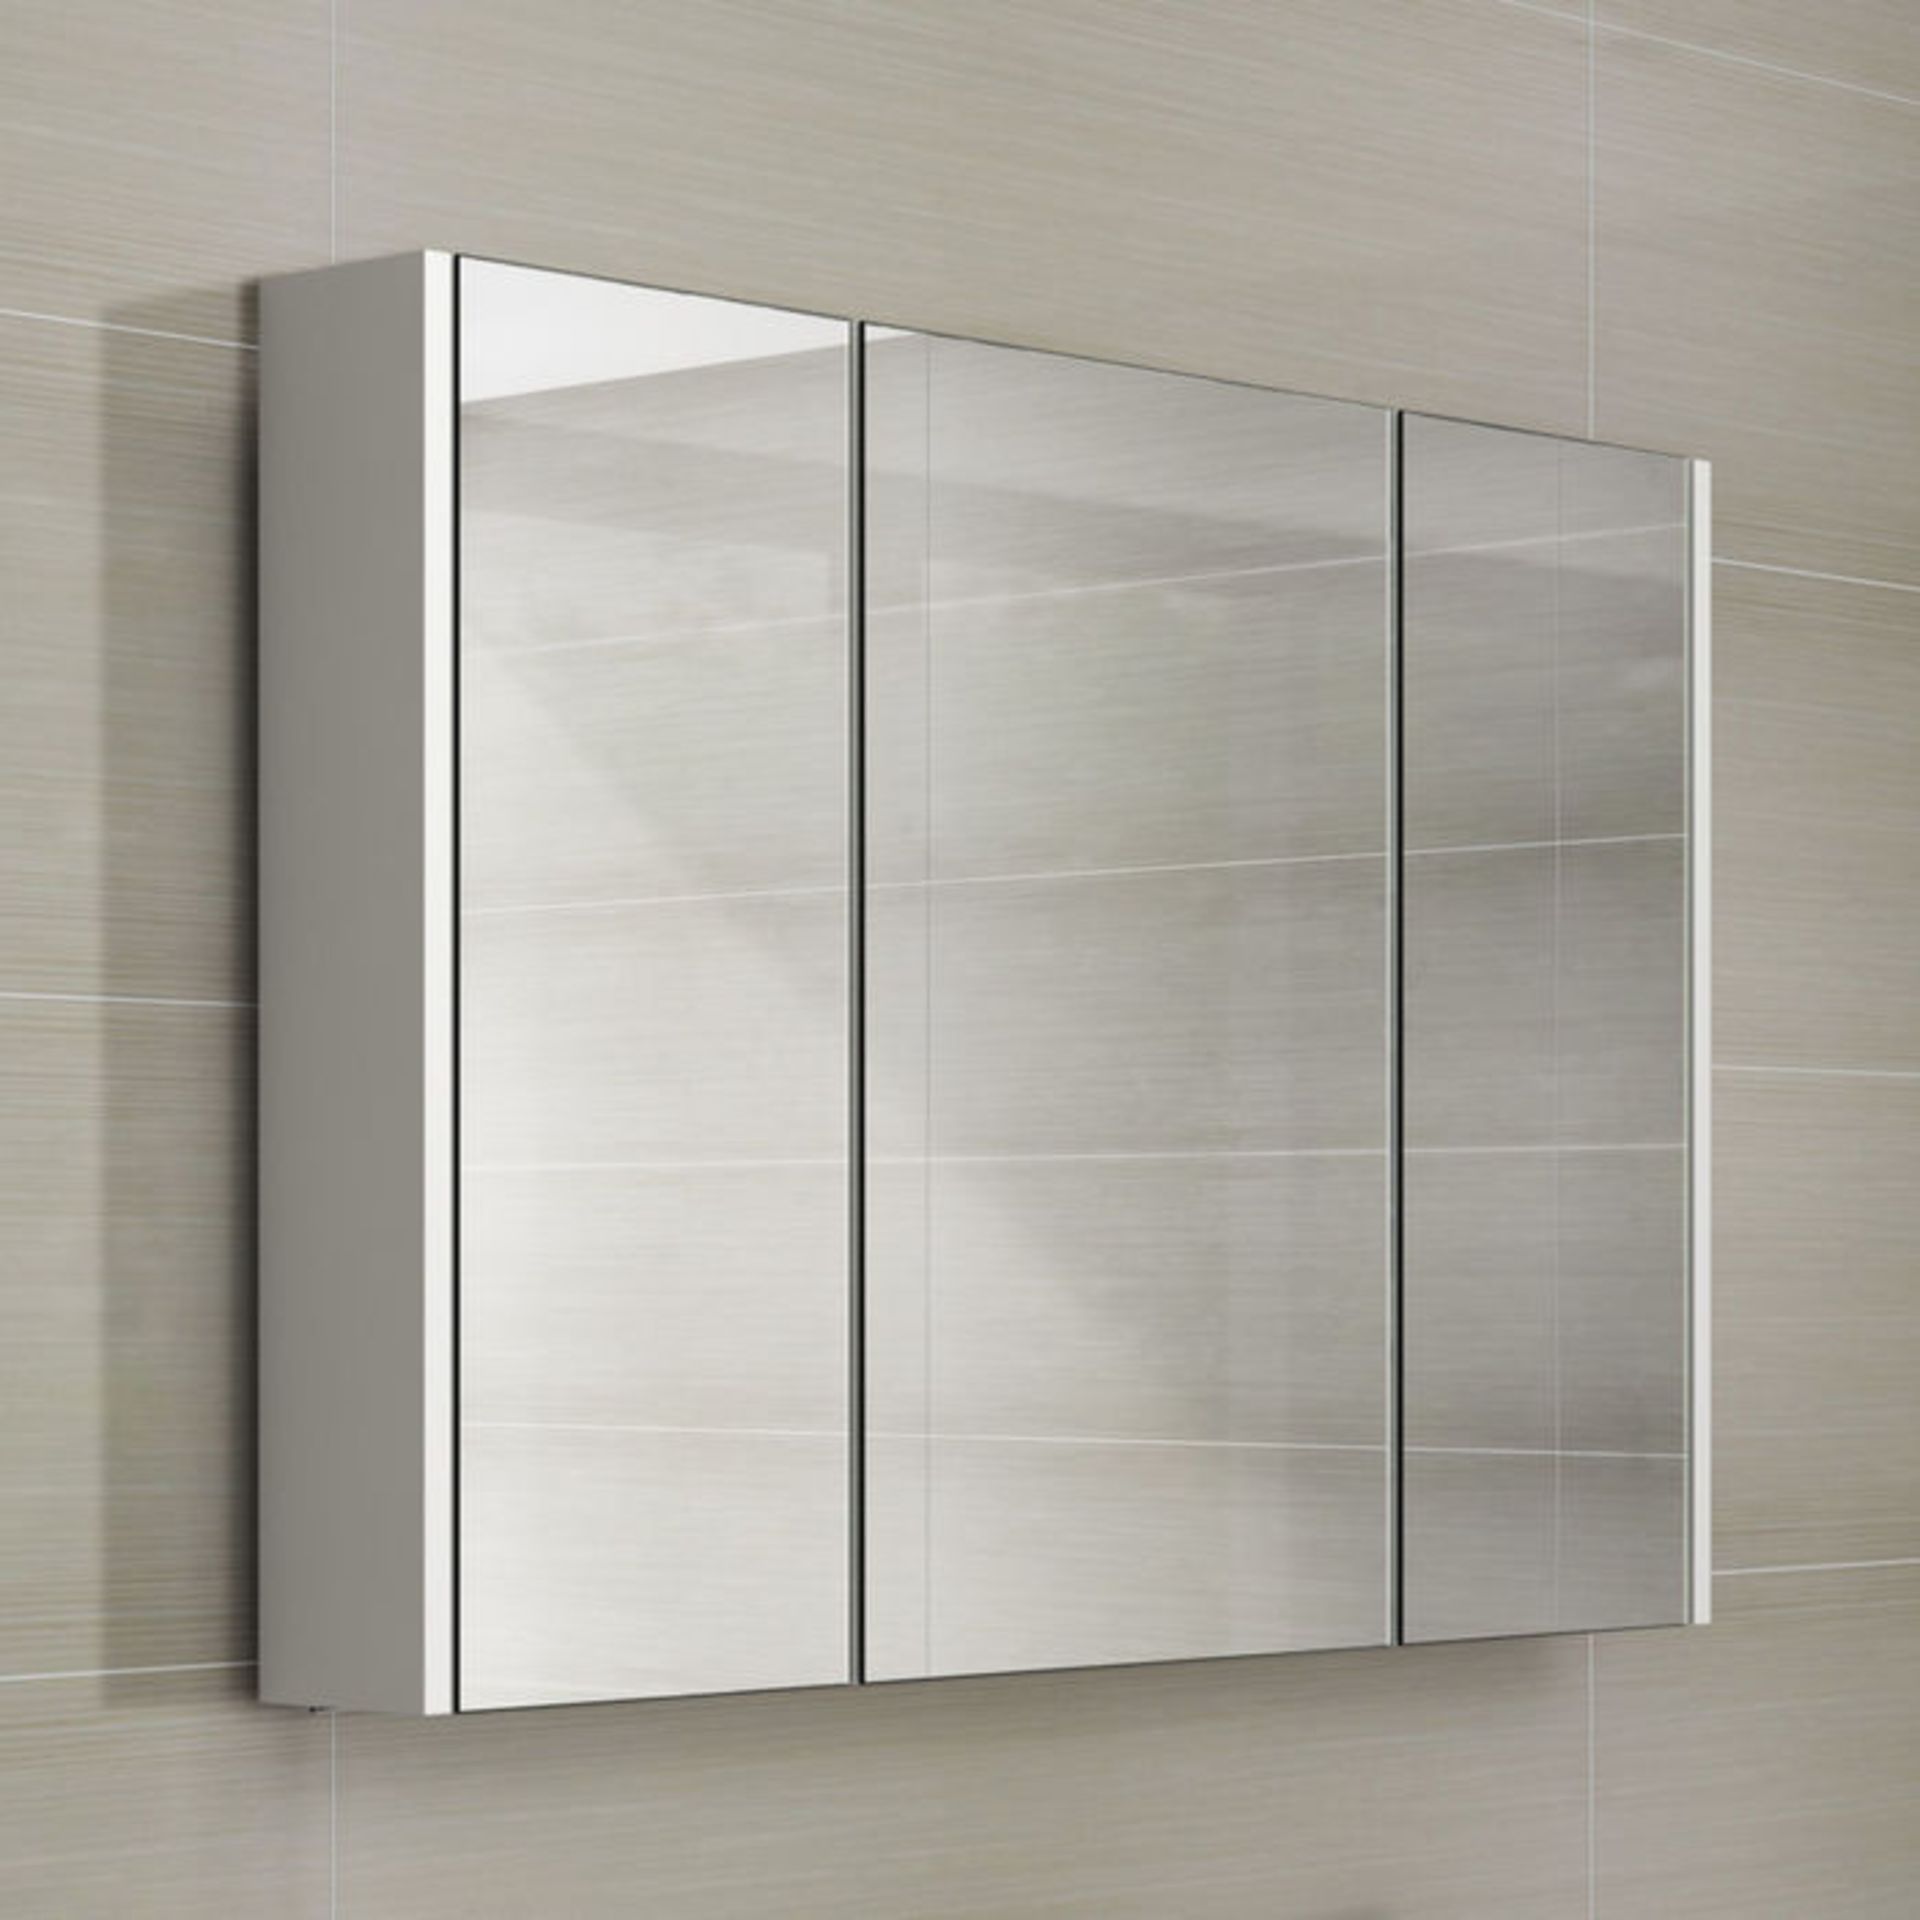 (TA169) 900mm Gloss White Triple Door Mirror Cabinet. RRP £299.99. Sleek contemporary design